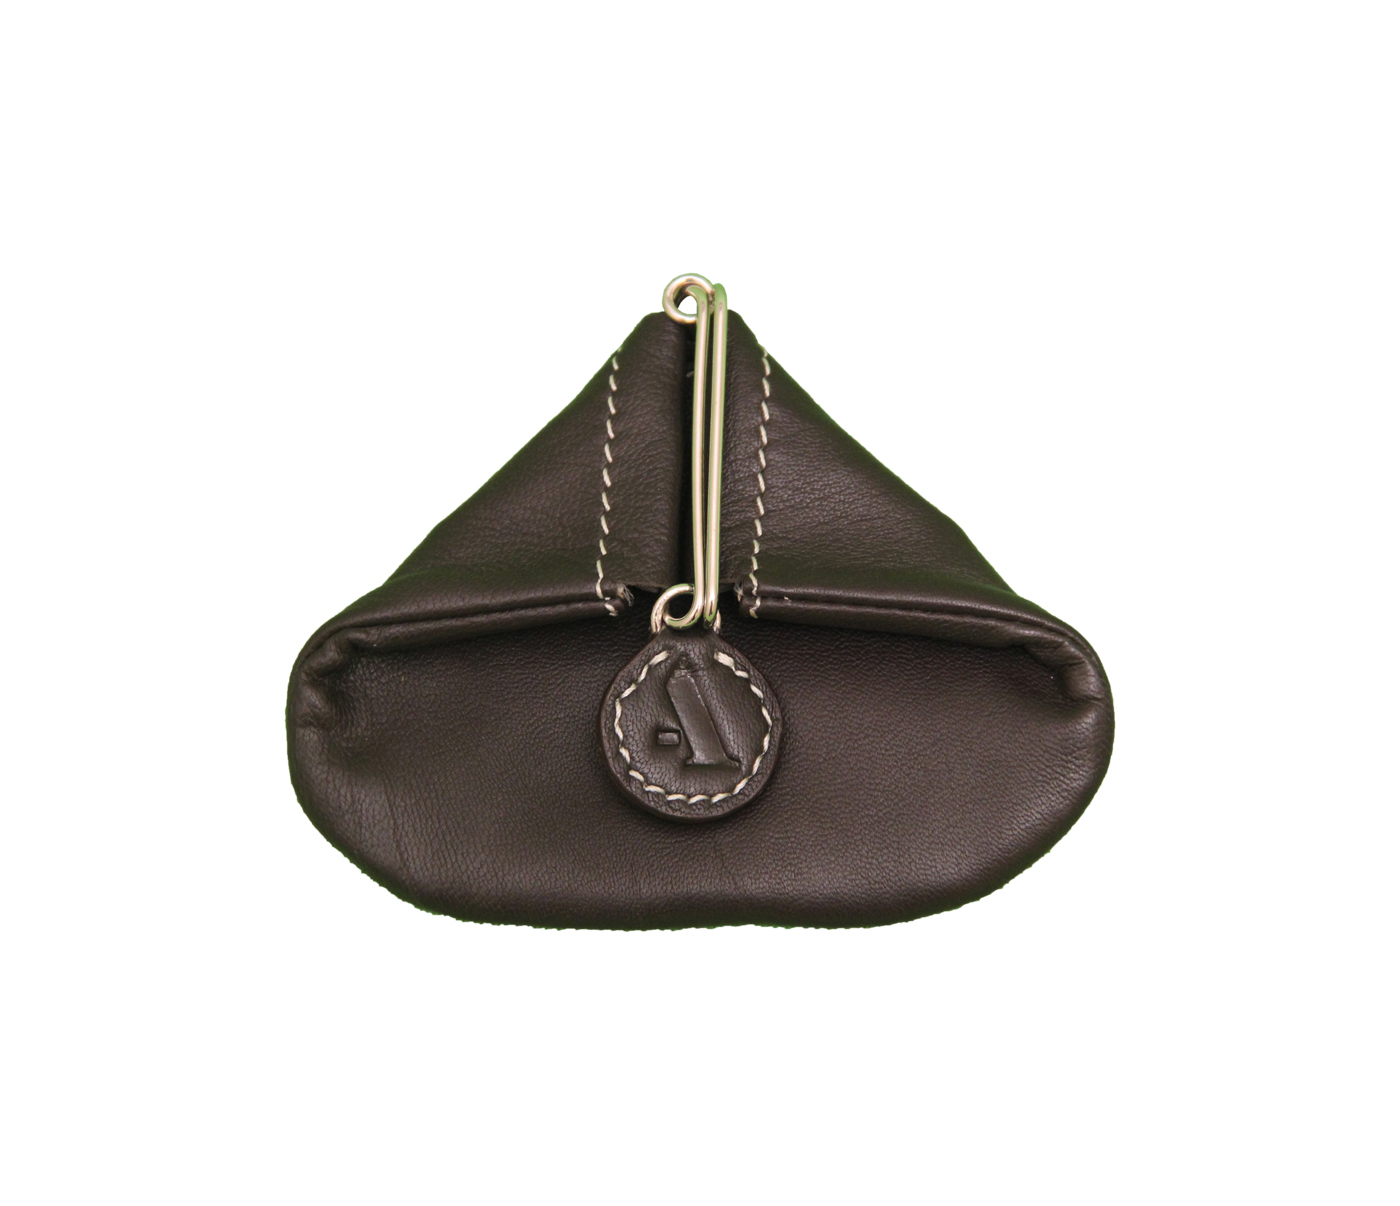 Coin Purse--Triangular shape mini coin purse in Genuine Leather - Brown